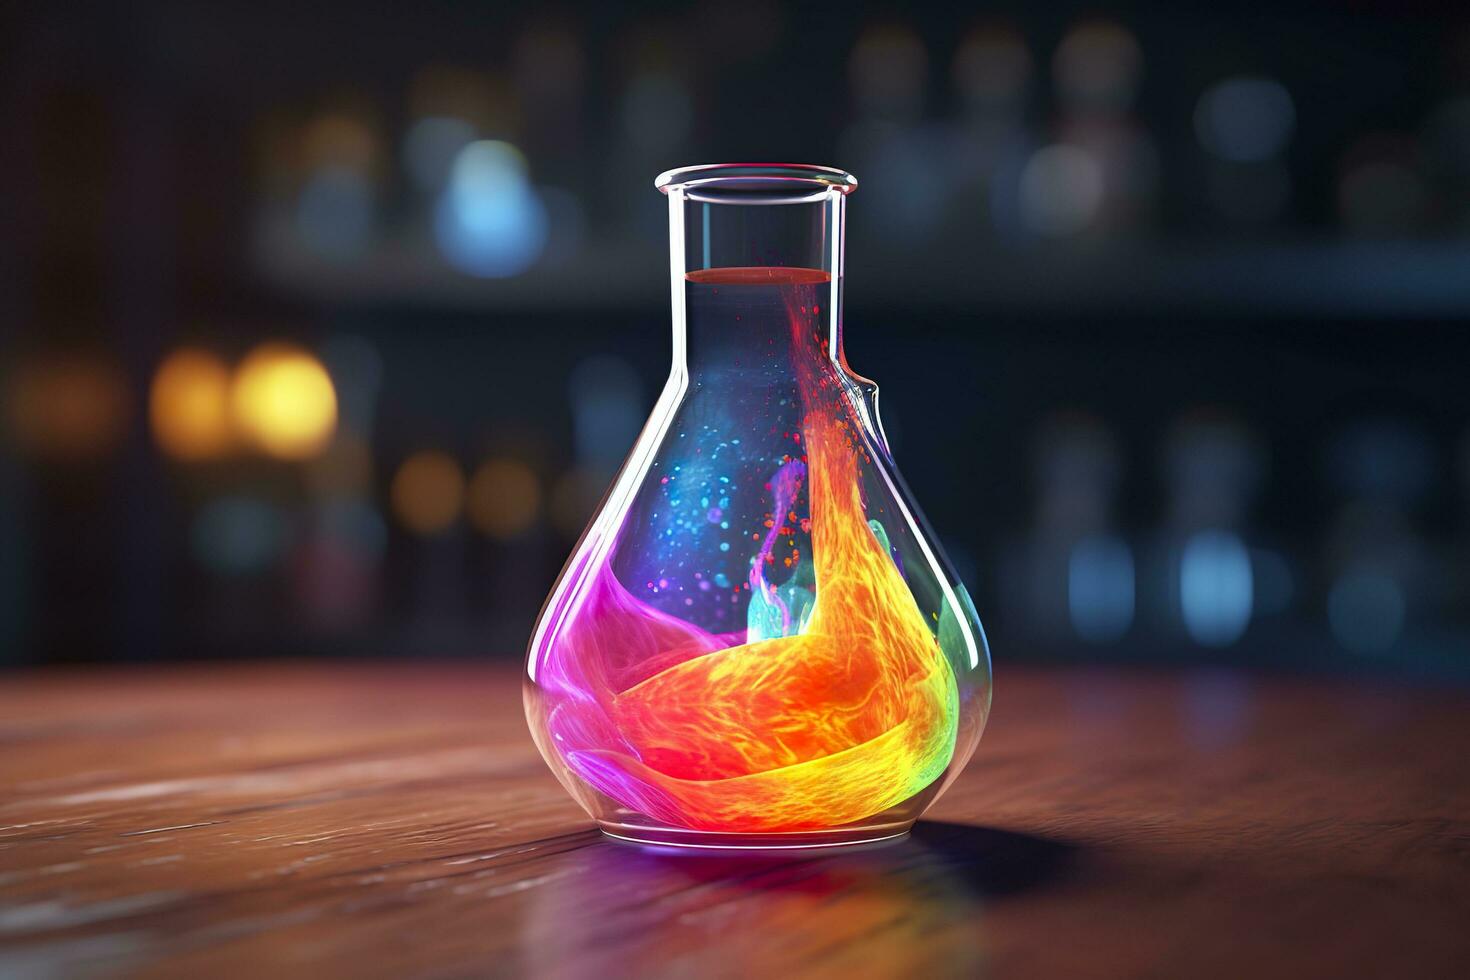 Close Up of a Science Beaker Filled with Multi Colored Liquids. AI Generative photo